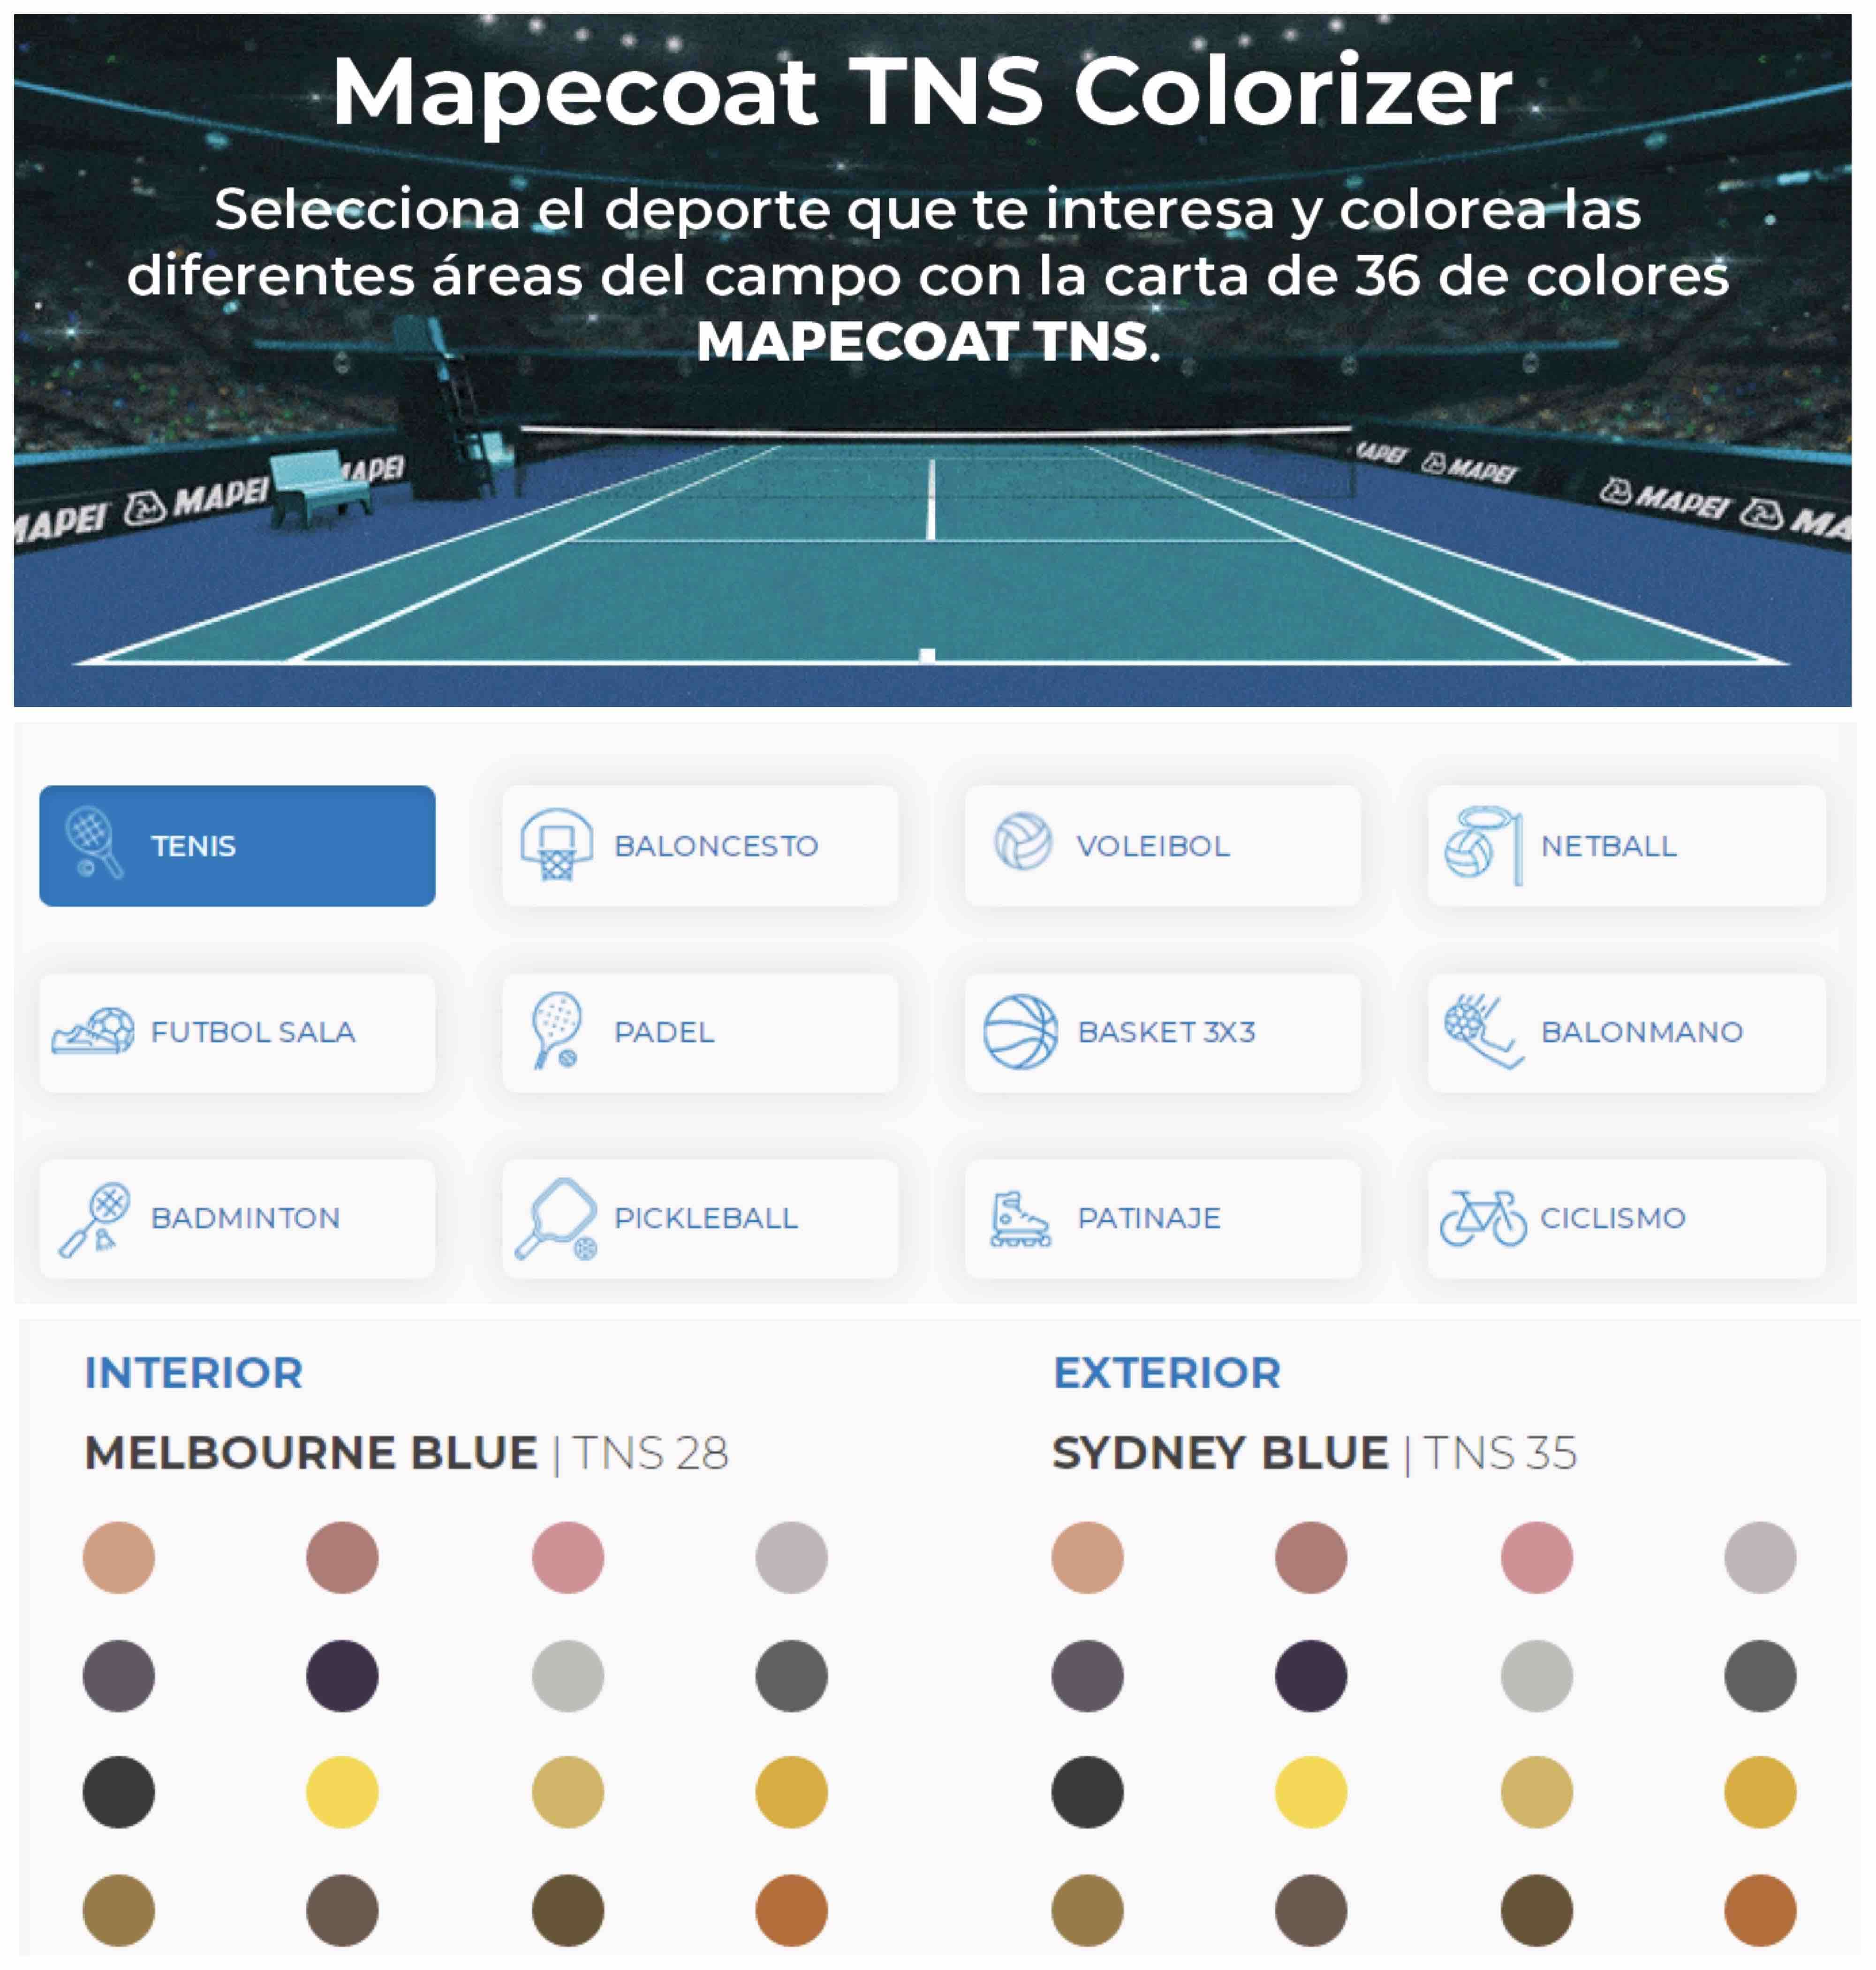 Mapecoat TNS Colorizer